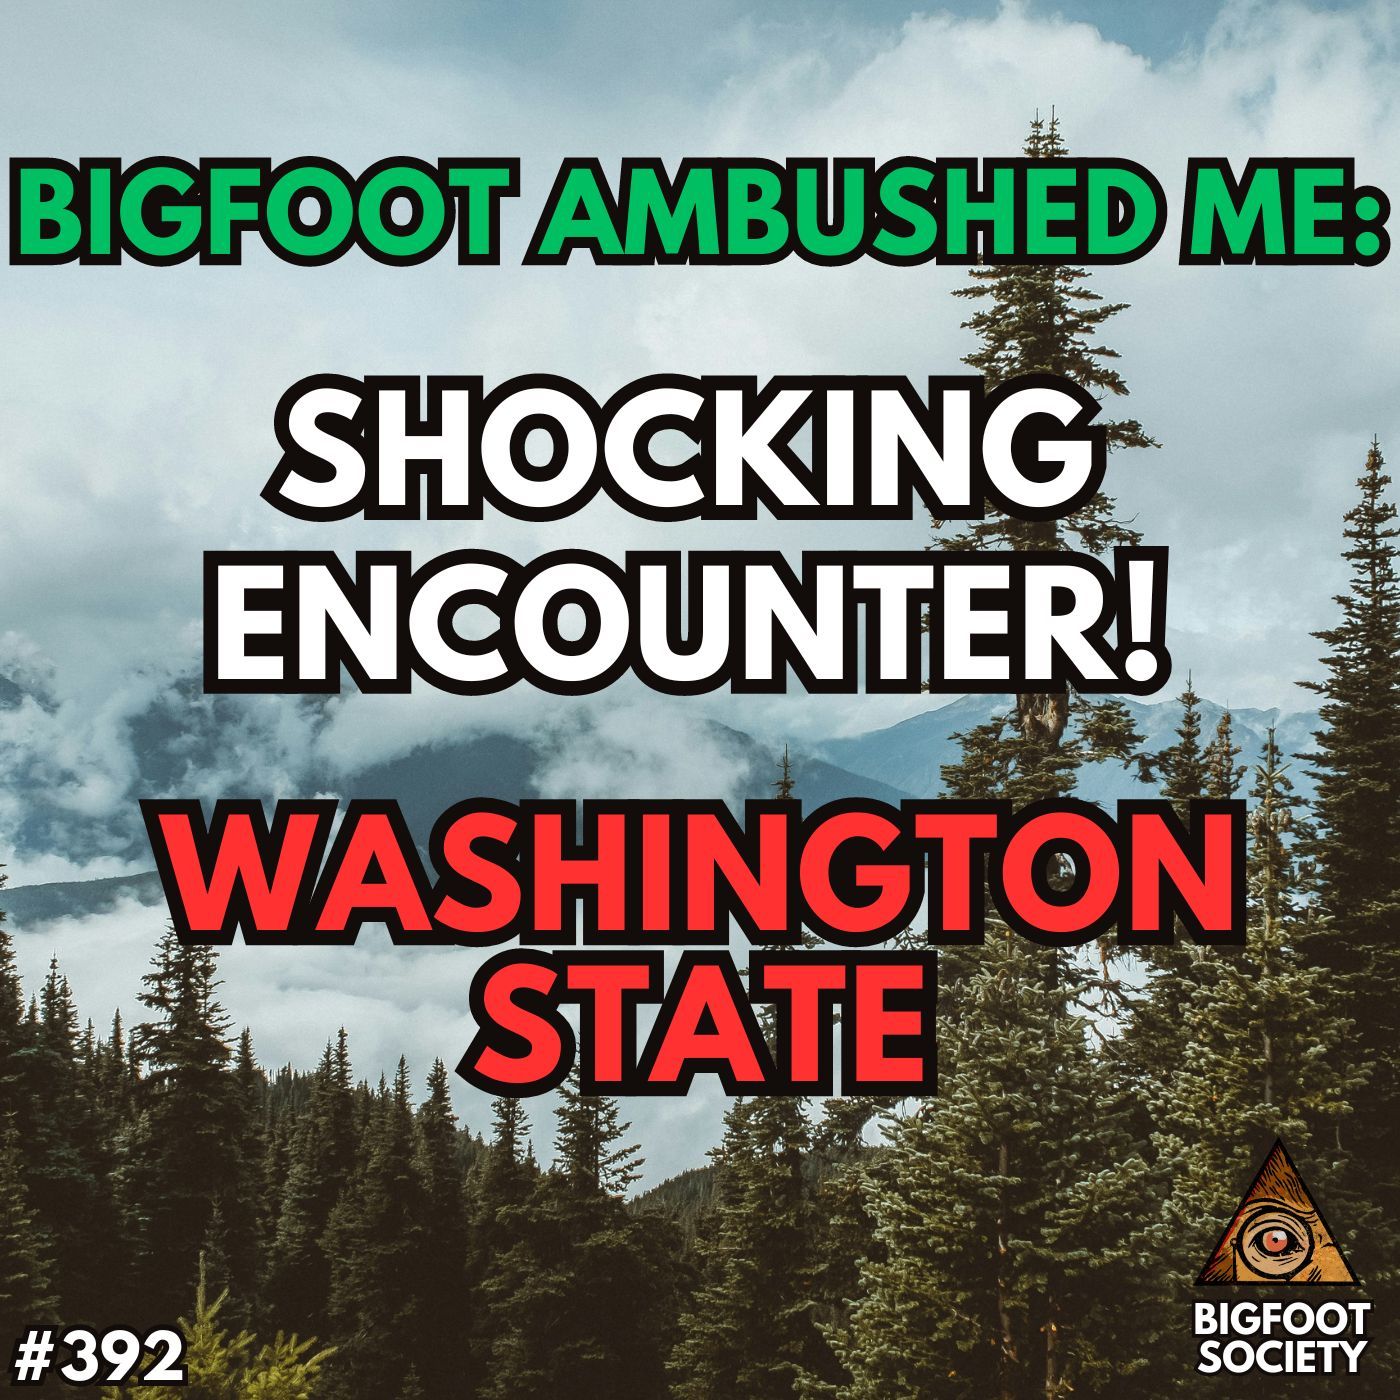 Ambushed by Bigfoot in Washington